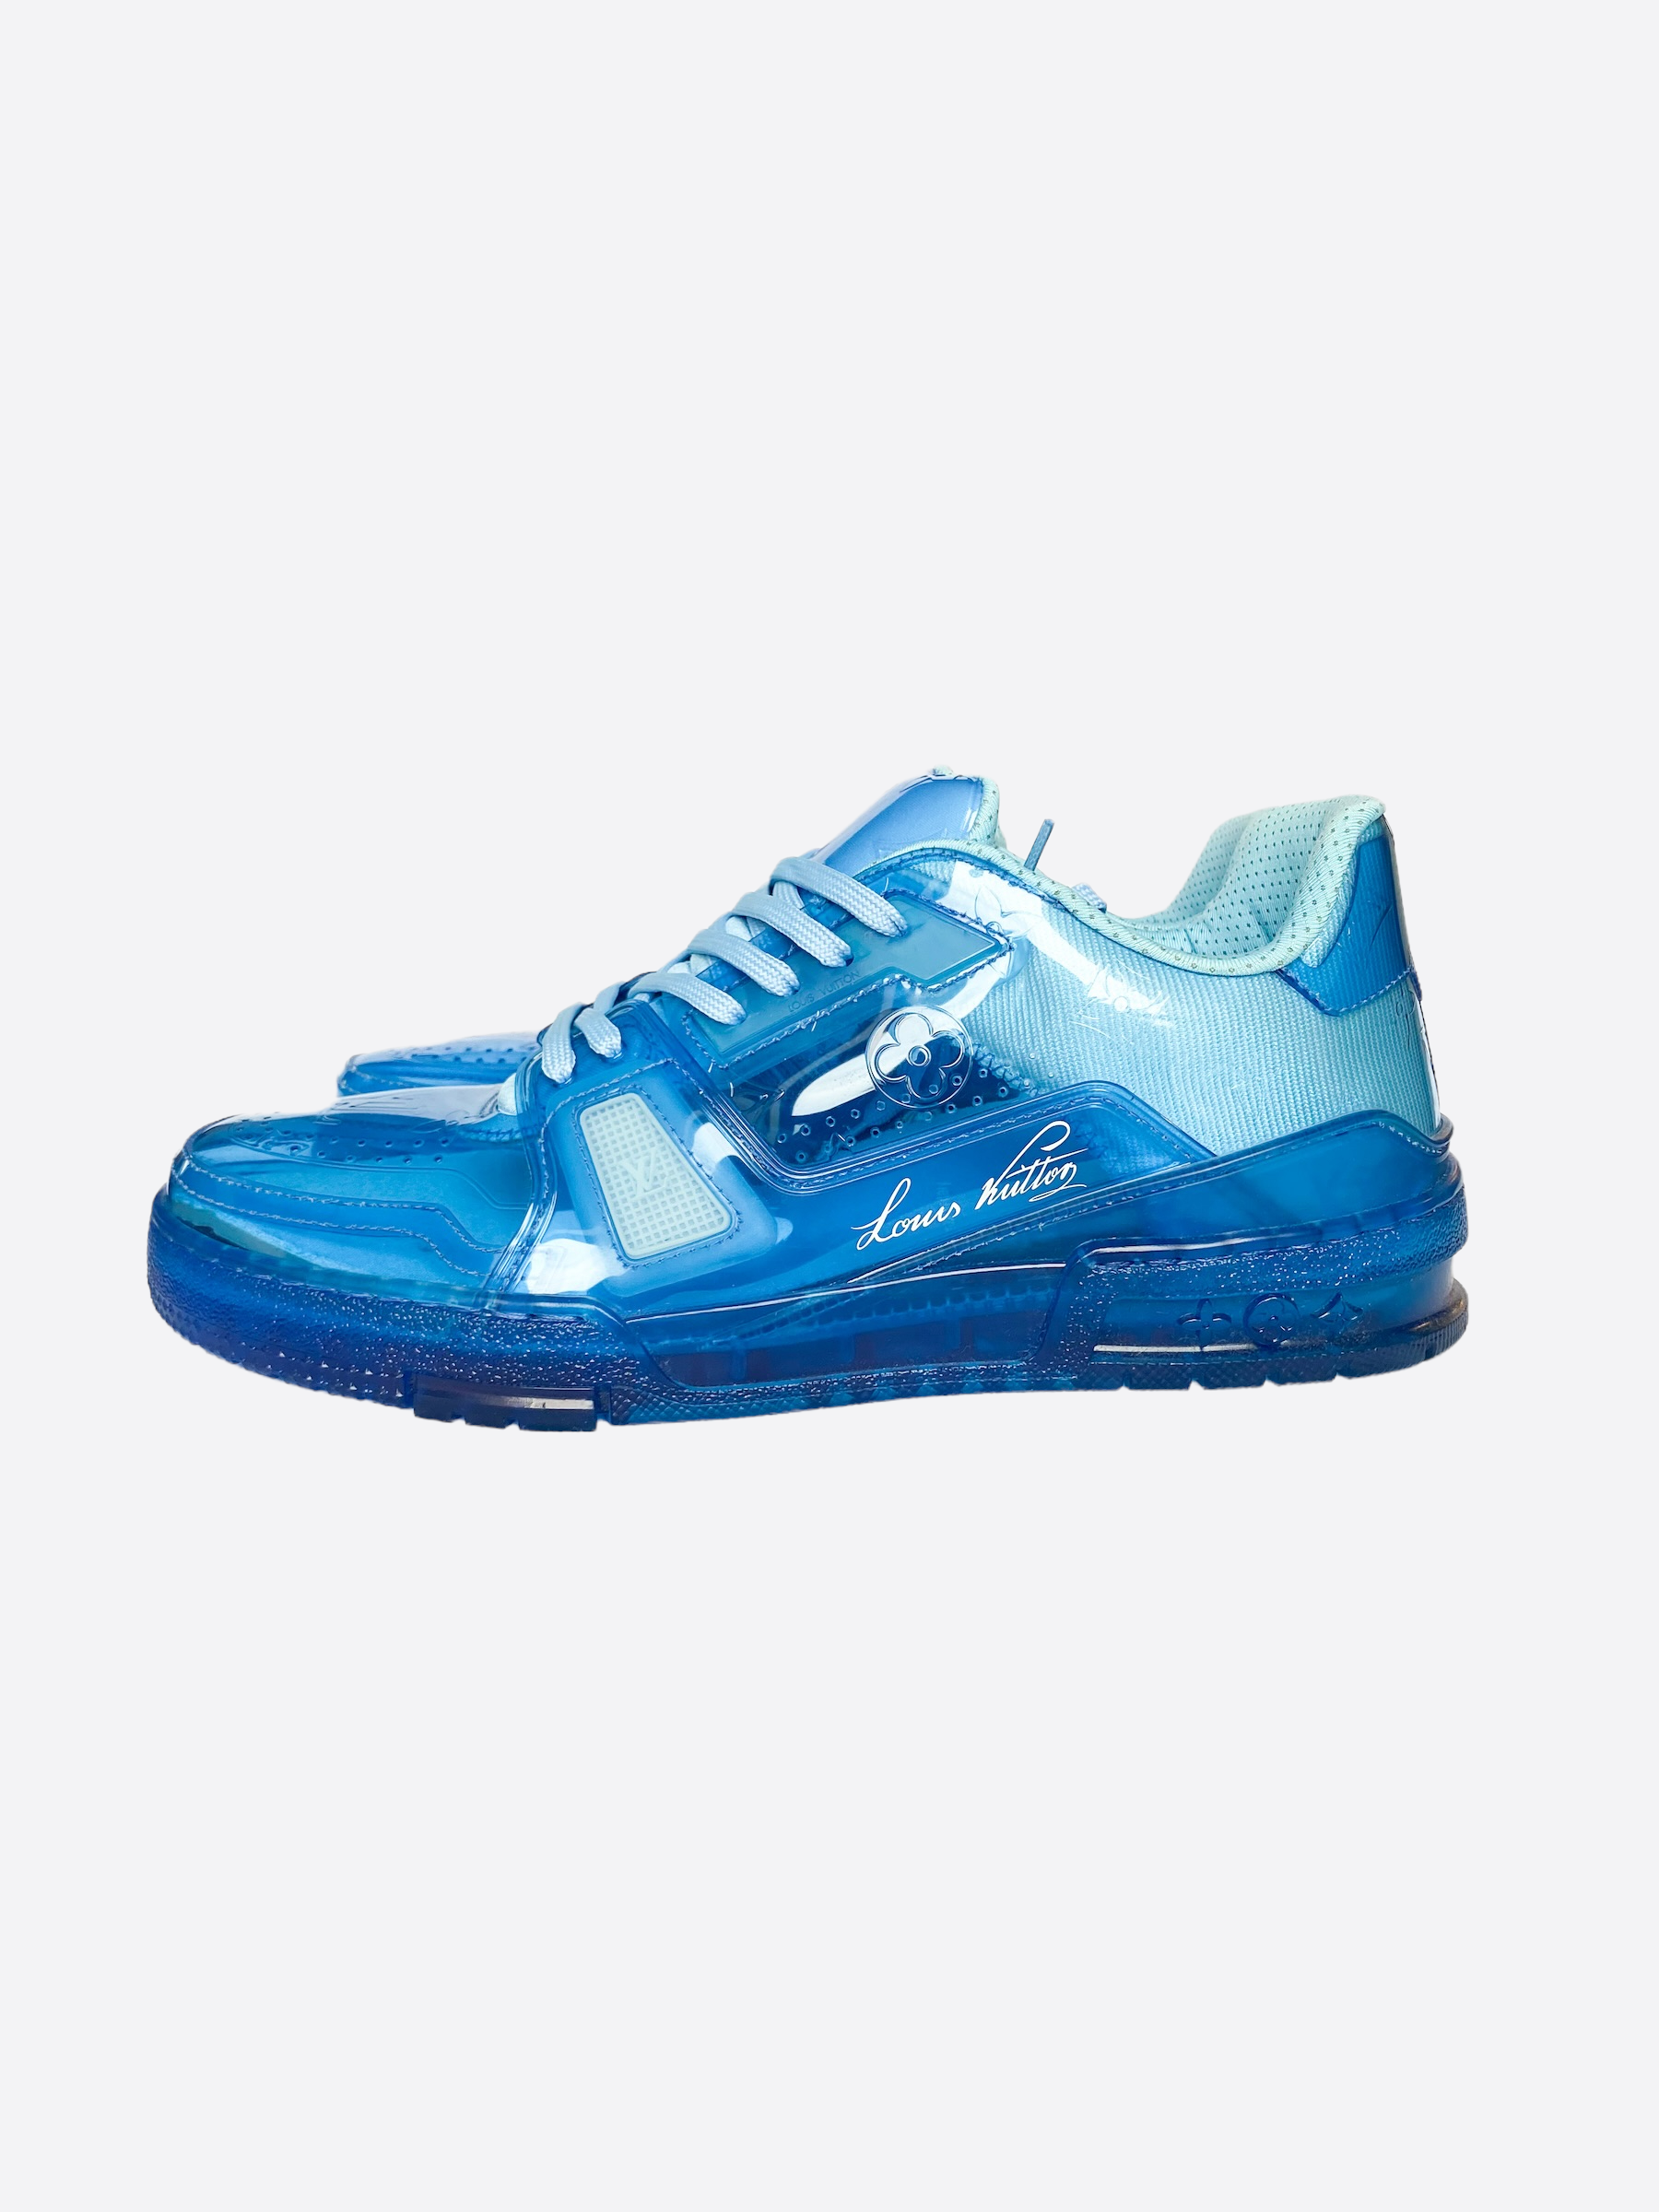 louis vuitton sneakers blue